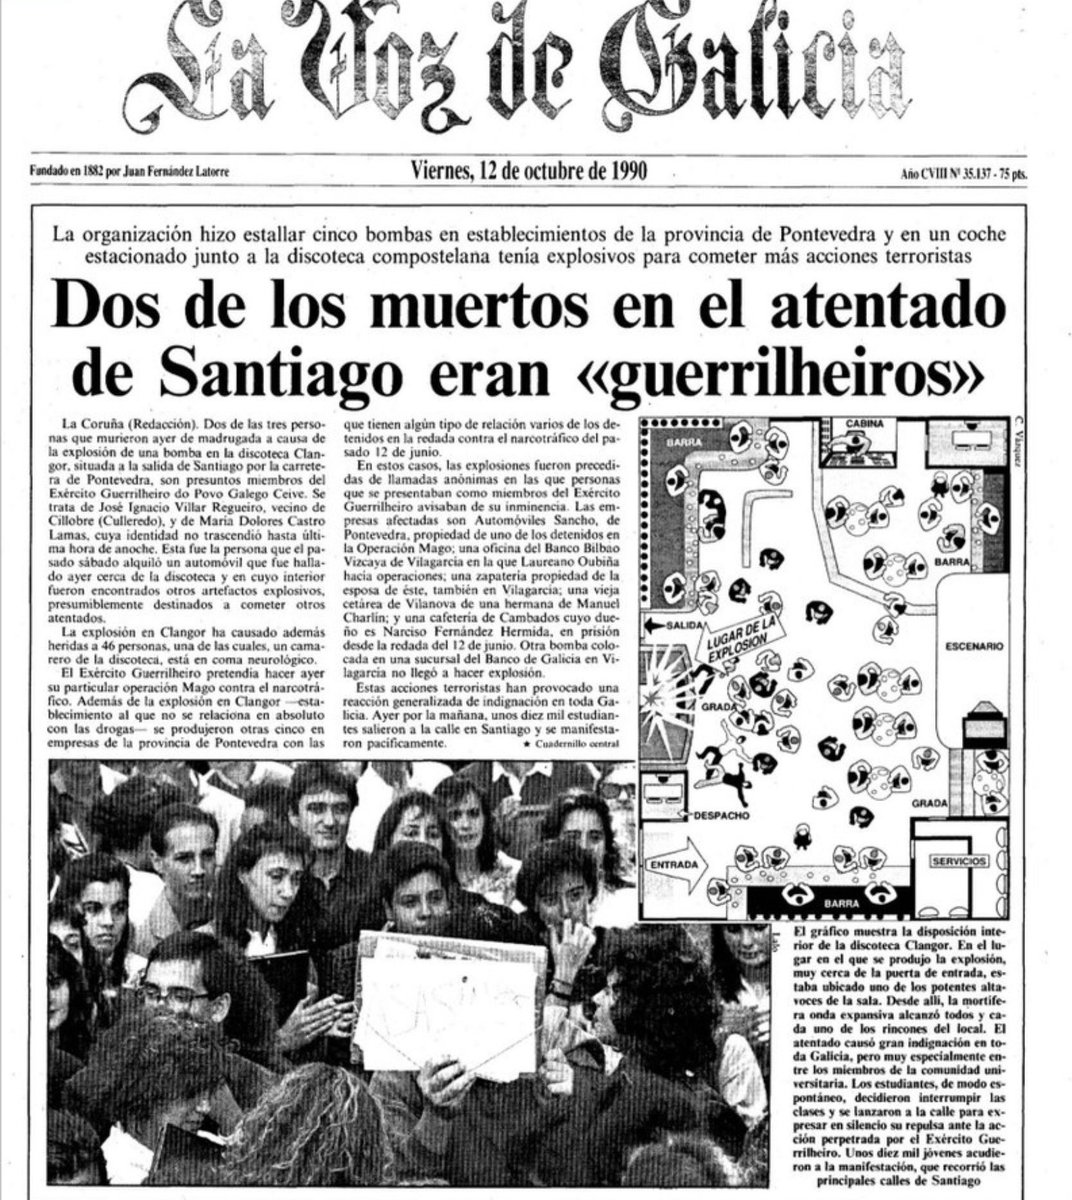 Un día como hoy de 1990 el Exército Guerrilheiro do Povo Galego Ceive (#EGPGC) asesinó en #SantiagoDeCompostela a MARÍA MERCEDES DOMÍNGUEZ RODRÍGUEZ. 

Fue víctima, junto a 2 terroristas, de la explosión de una bomba que éstos colocaron en una discoteca.

#MEMORIA